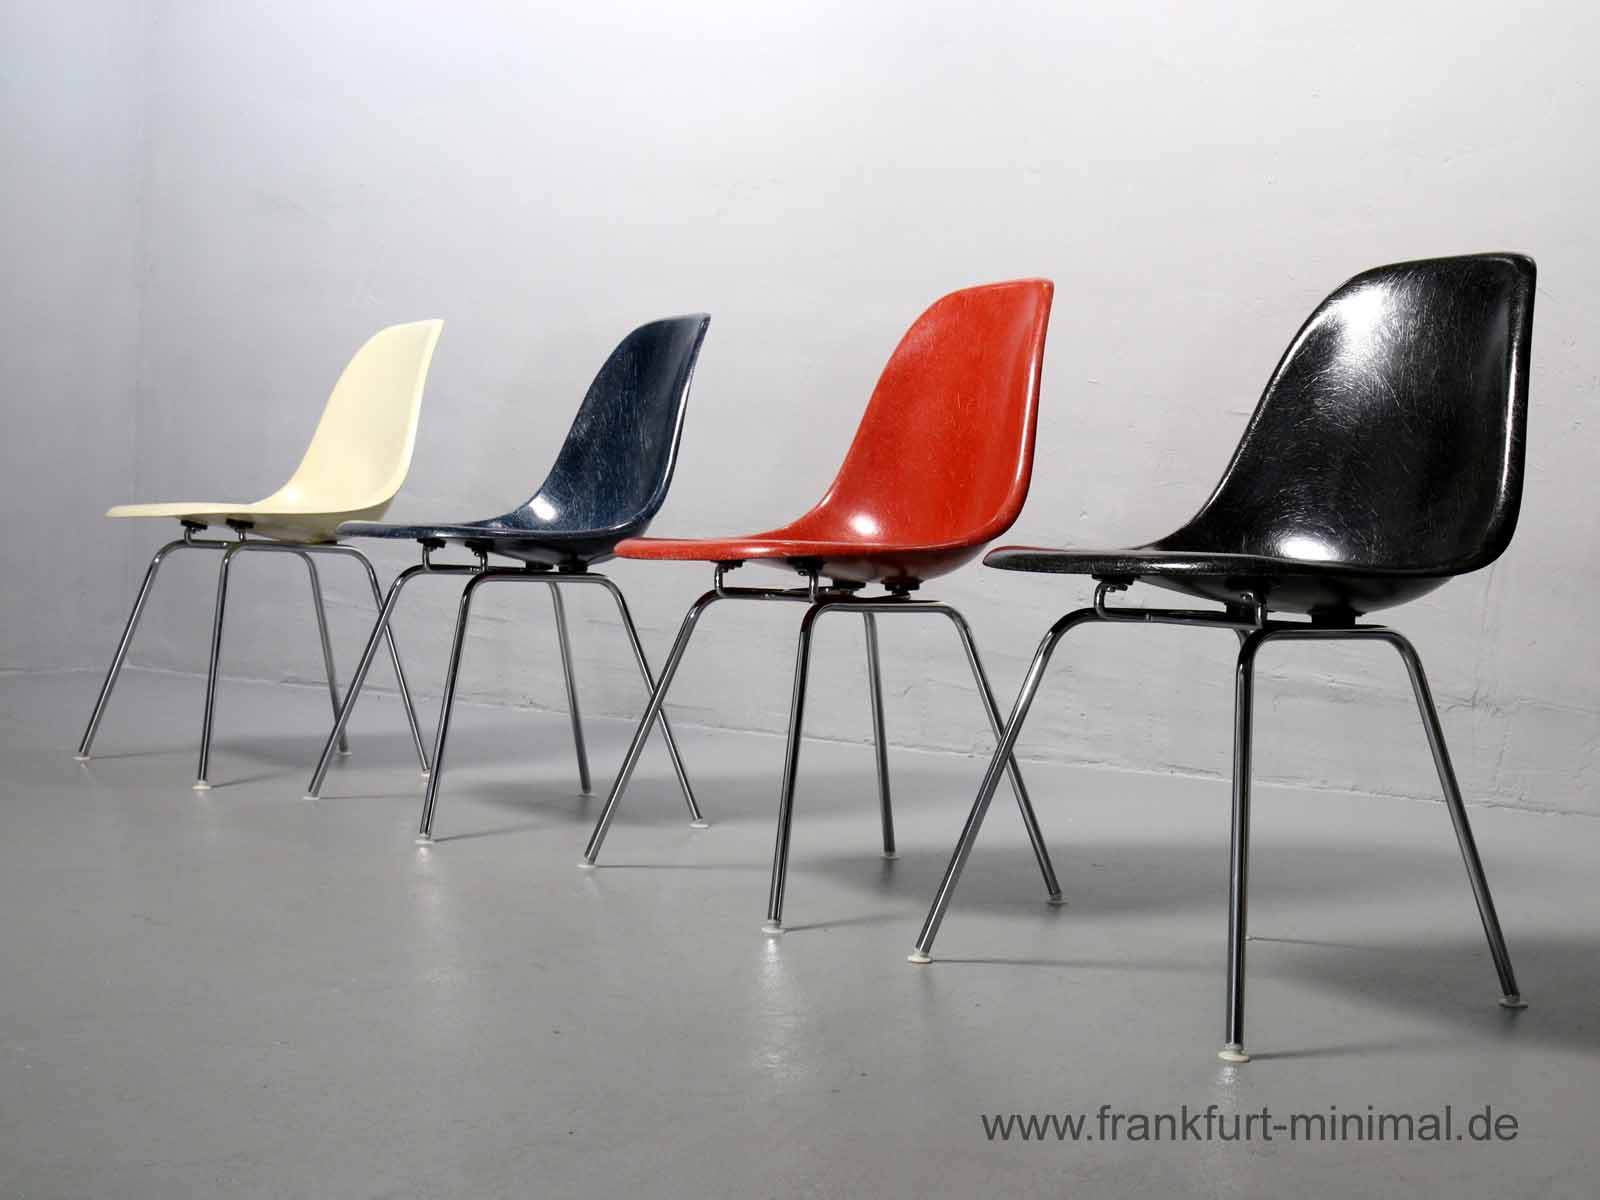 Elastisch moord knal details - frankfurt minimal - 20th century furniture, Designklassiker und  Vintage Möbel